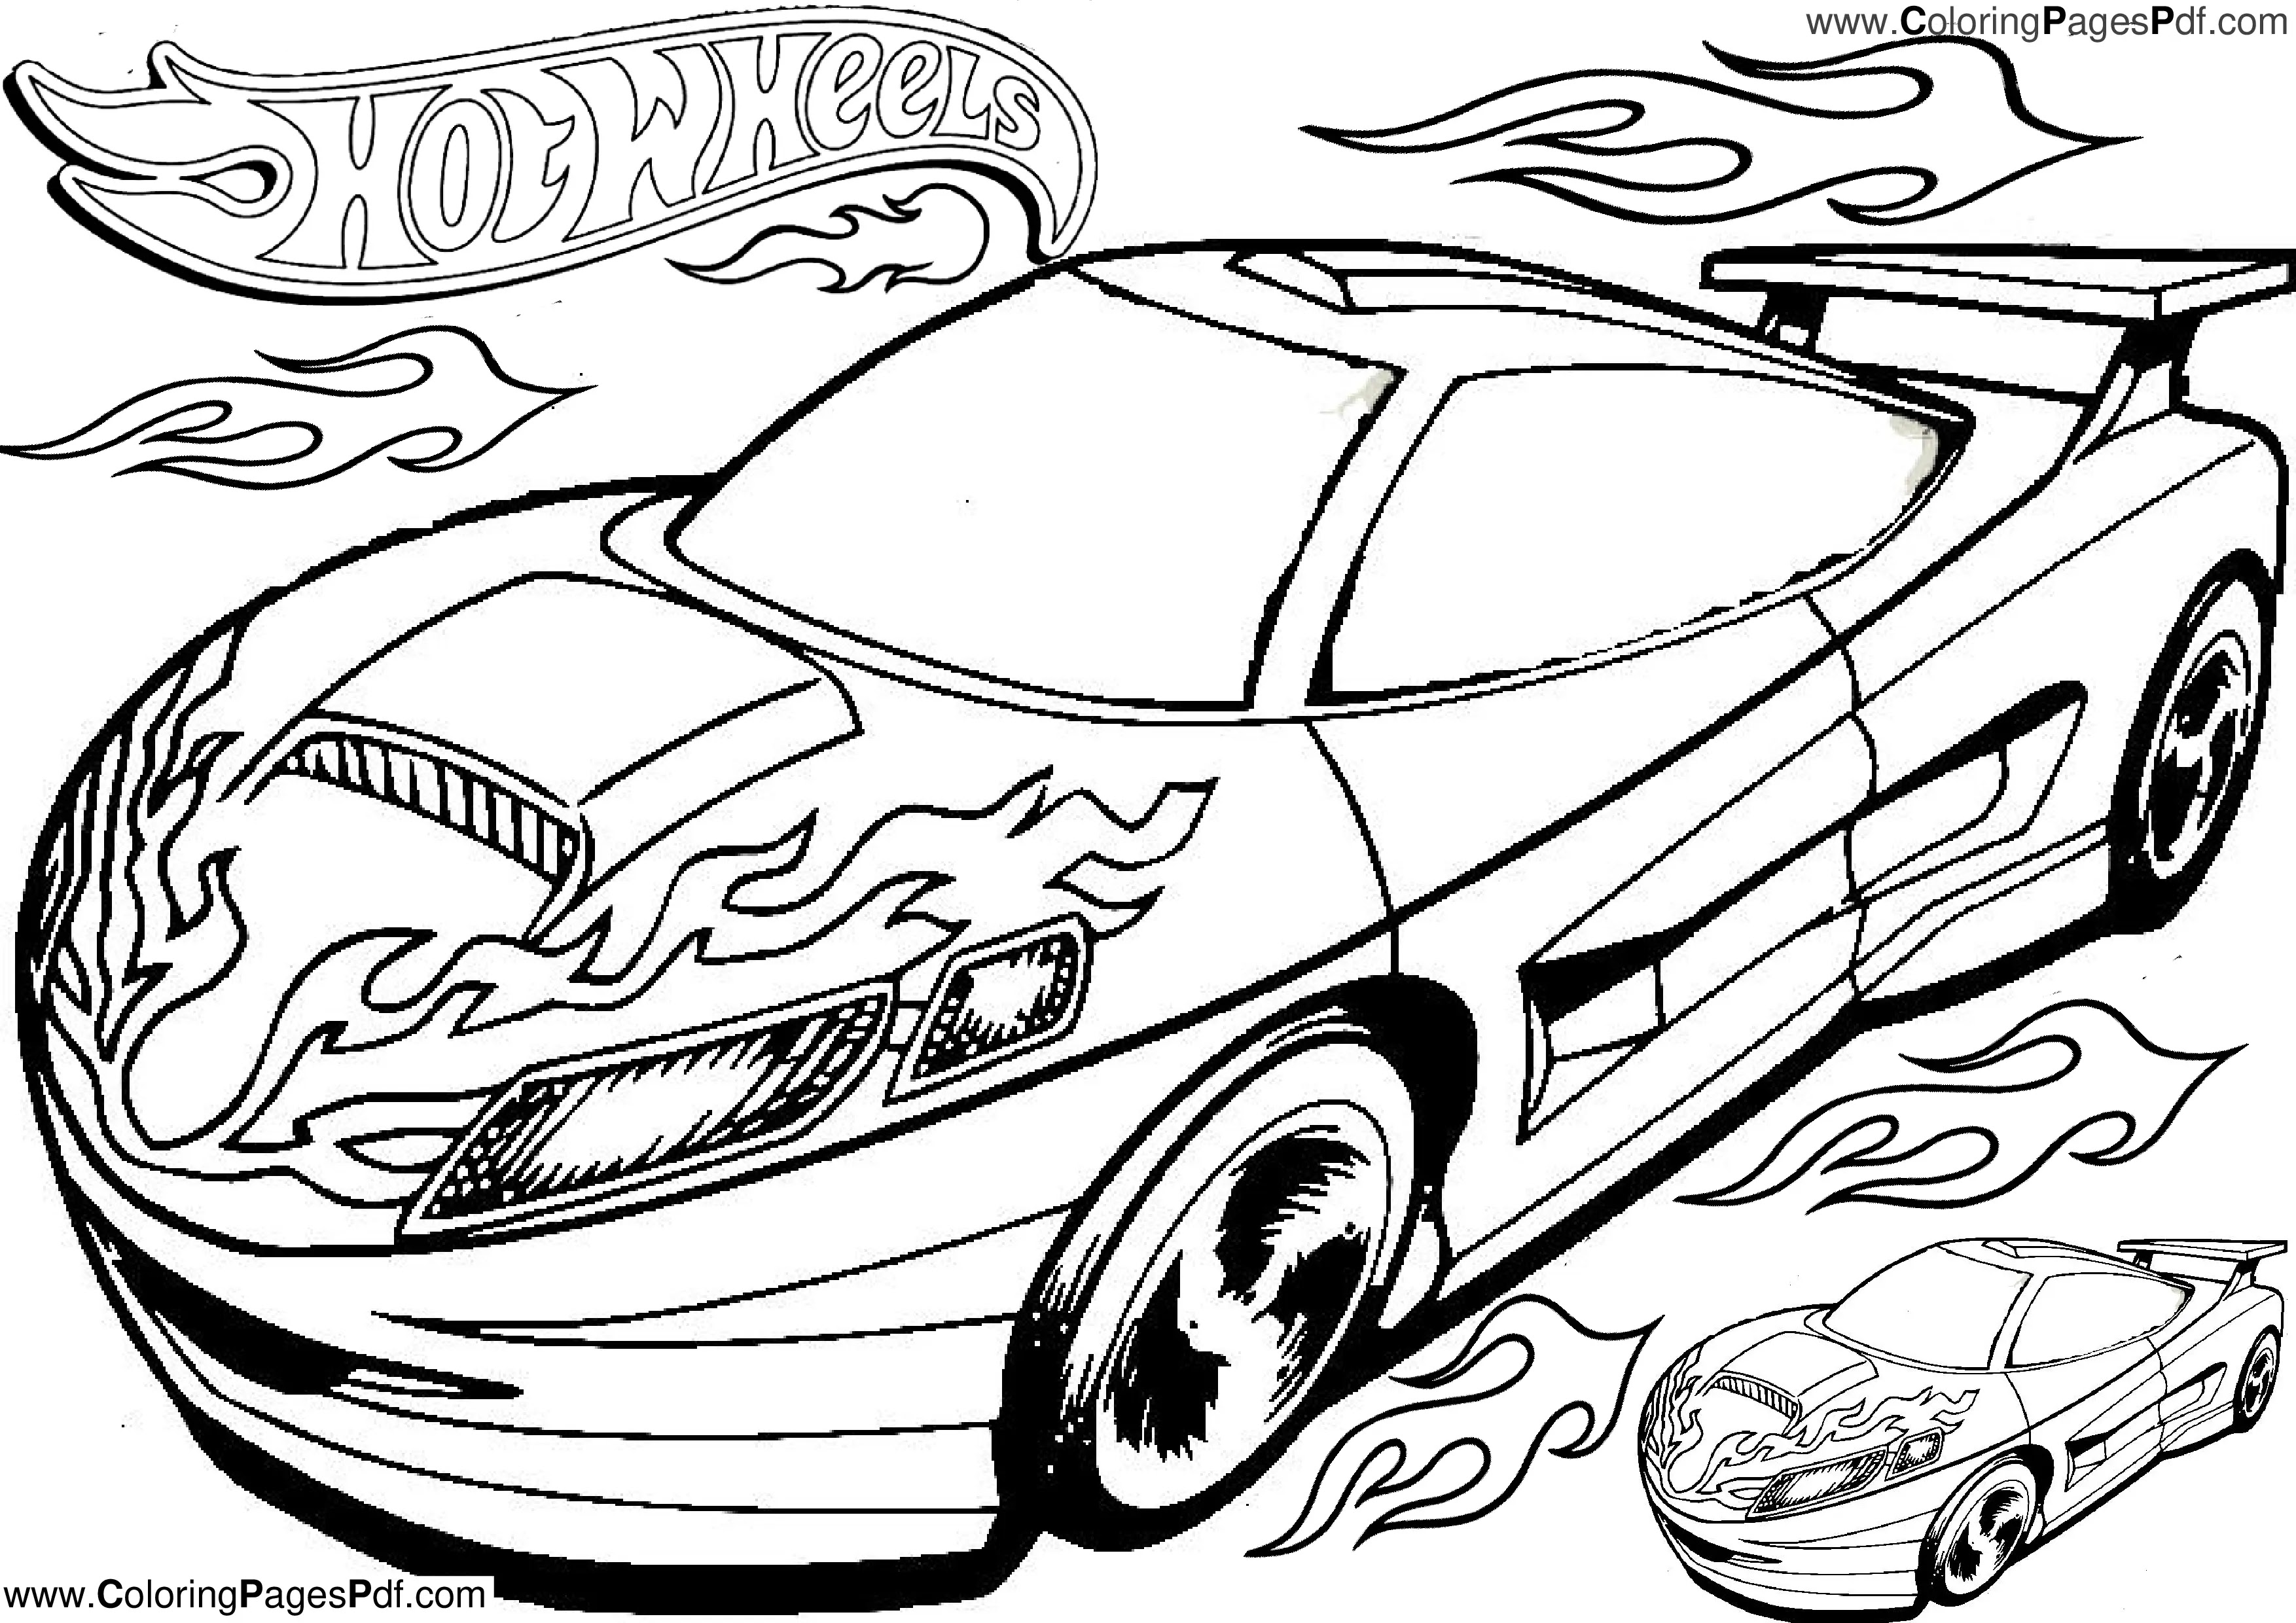 Hot wheels coloring book pdf